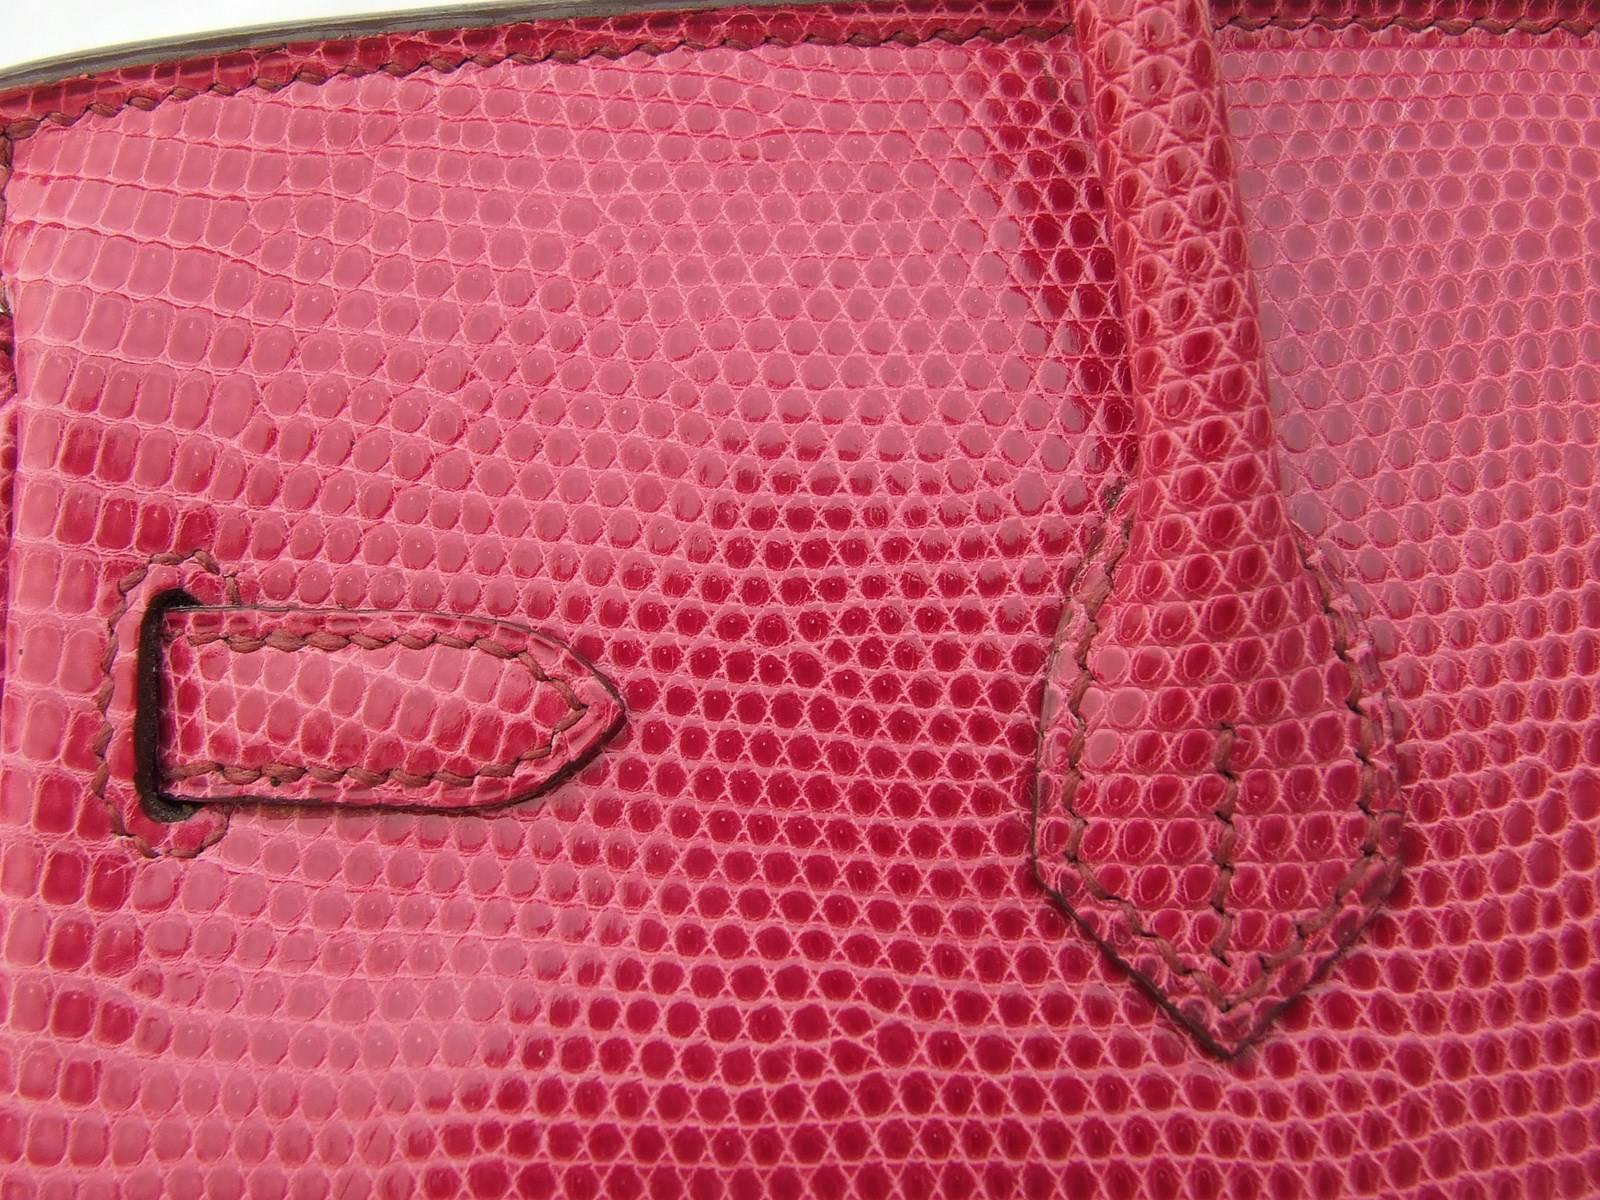 HERMES Birkin bag Fuchsia Pink Lizard Silver HDW 25 cm Rare and Coveted  3